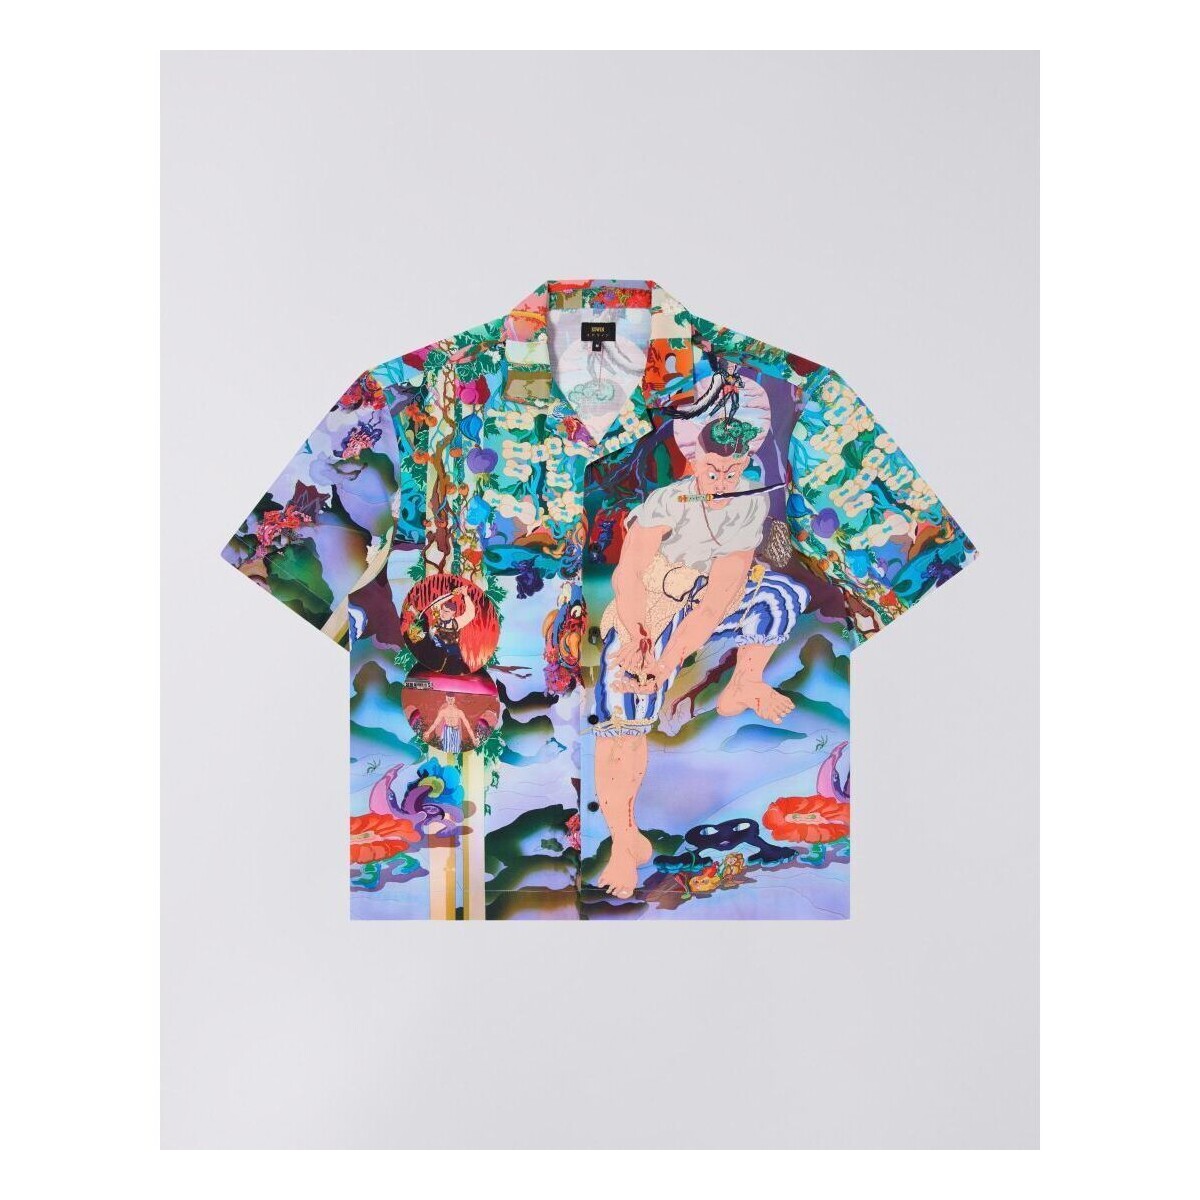 textil Hombre Camisas manga larga Edwin I033379.08.67. HEDIETHAMI-08.67 MULTI multicolore